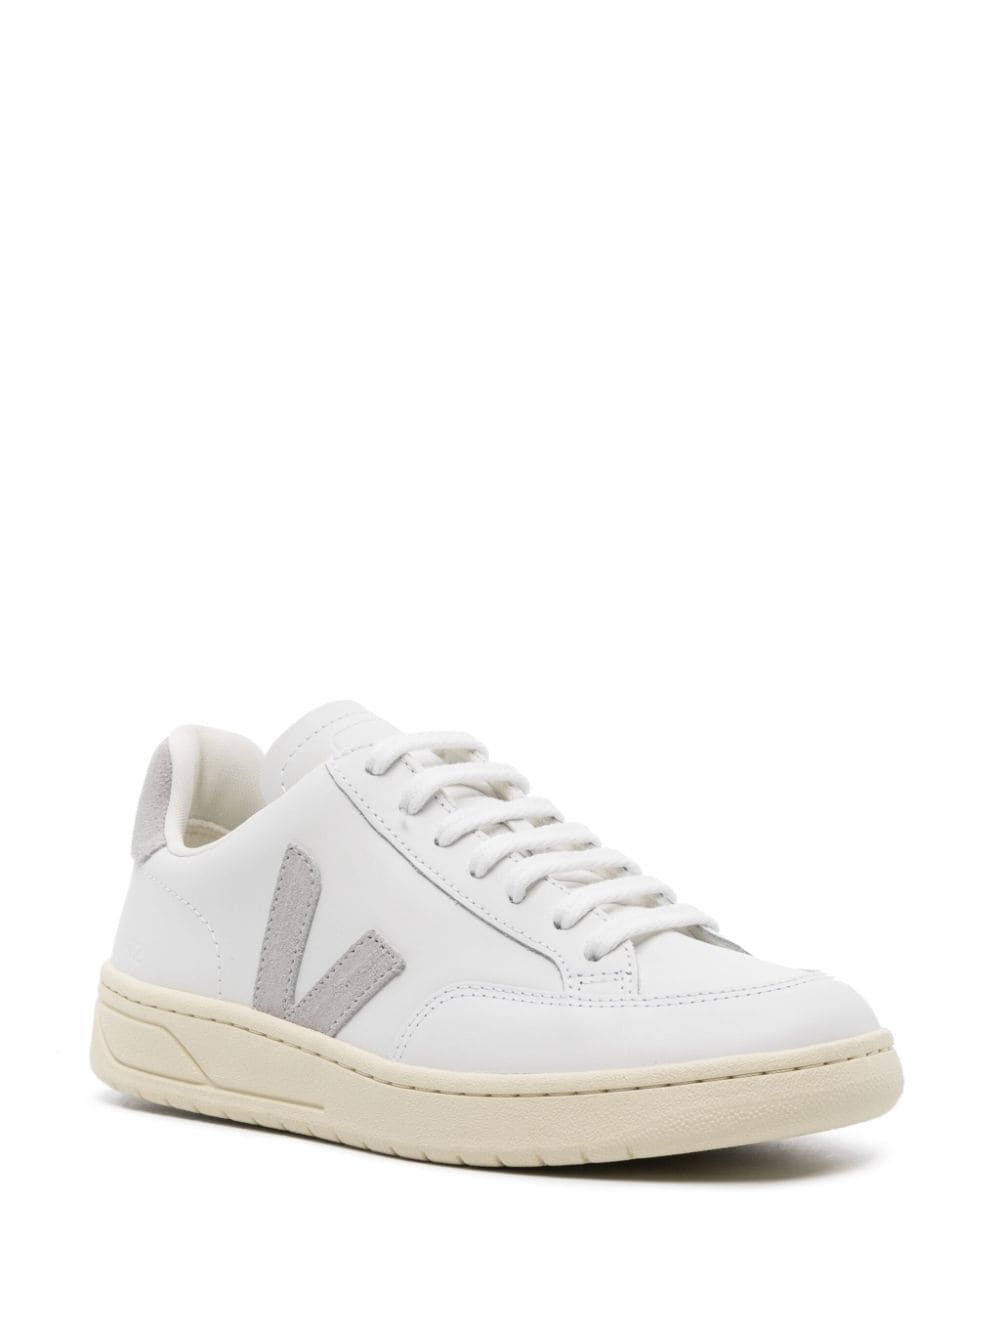 Sneaker Urca blanche avec logo gris